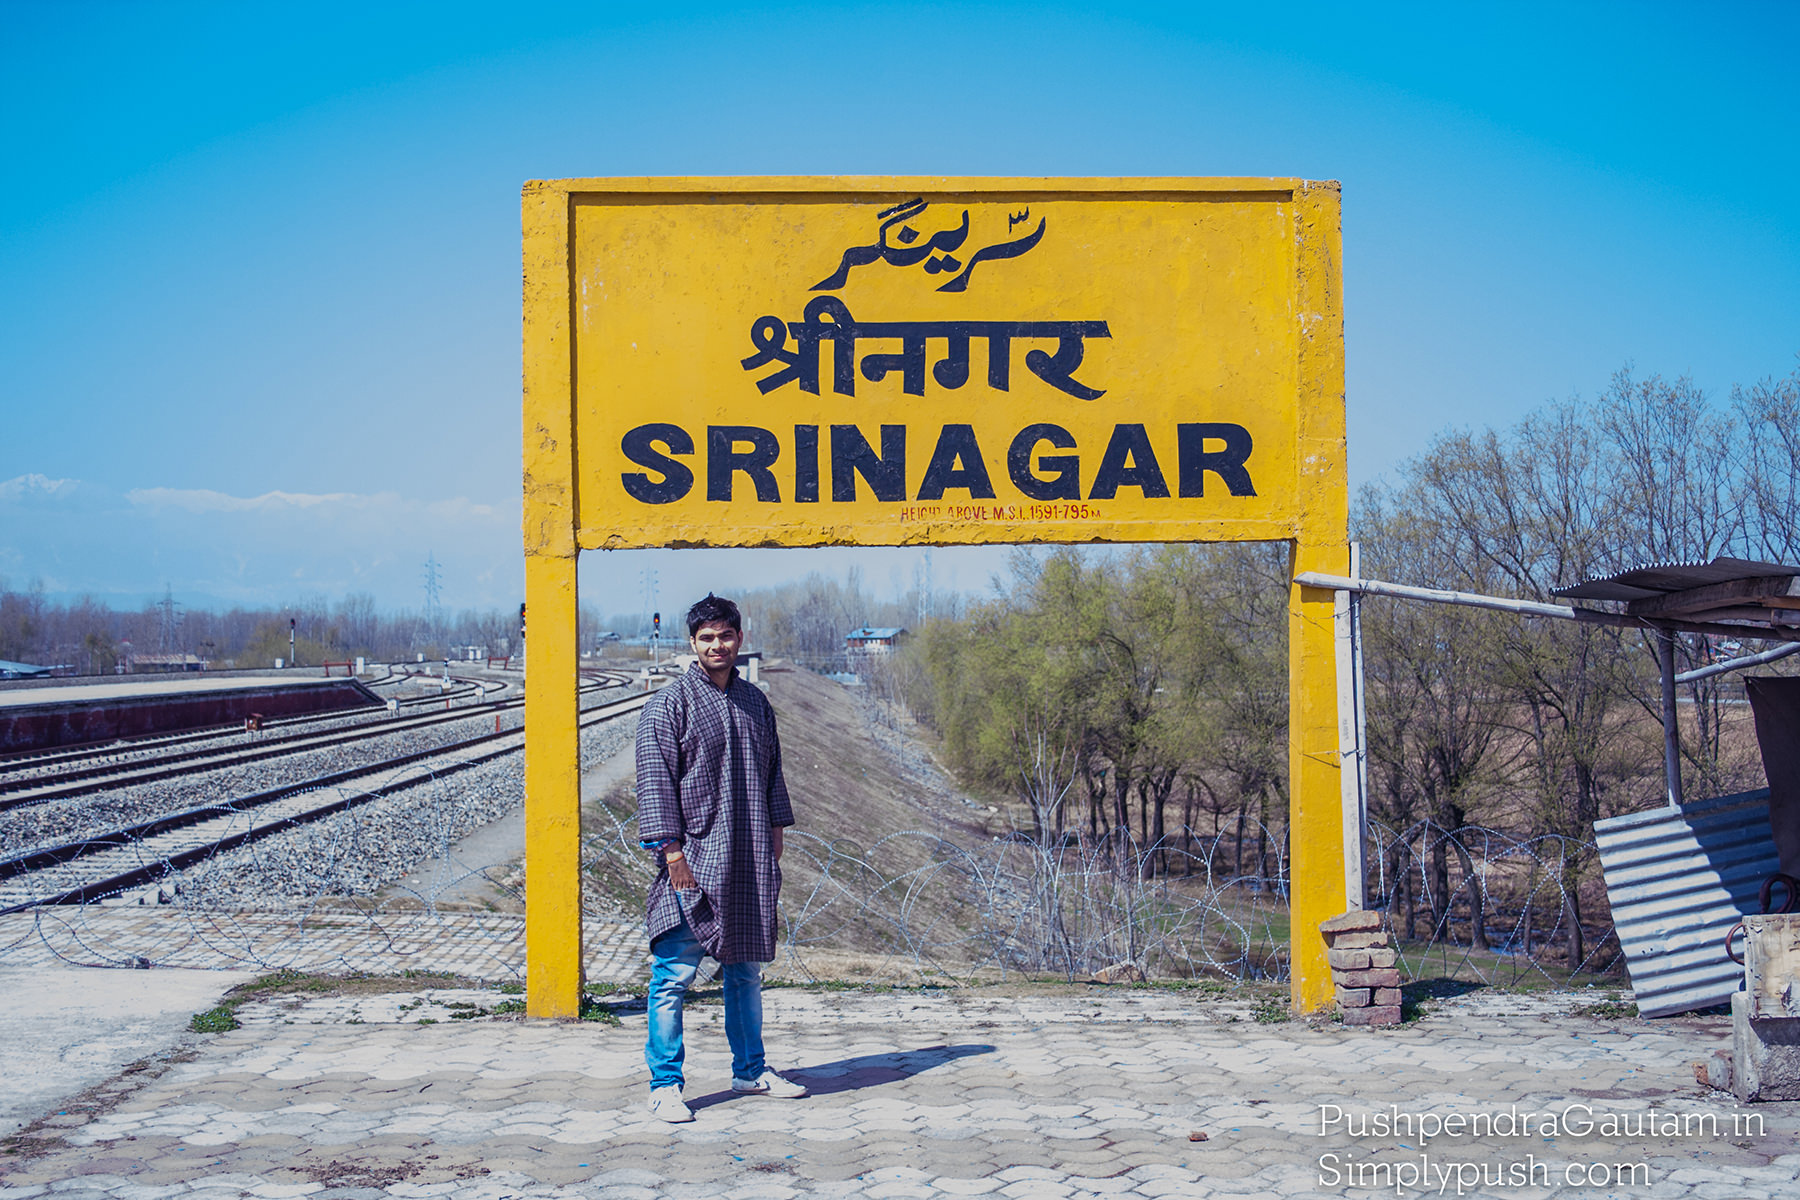 Srinagr-Banihal-railway-route-via-pir-panjal-railway-tunnel-jammu-kashmir-longest-railway-tunne-india